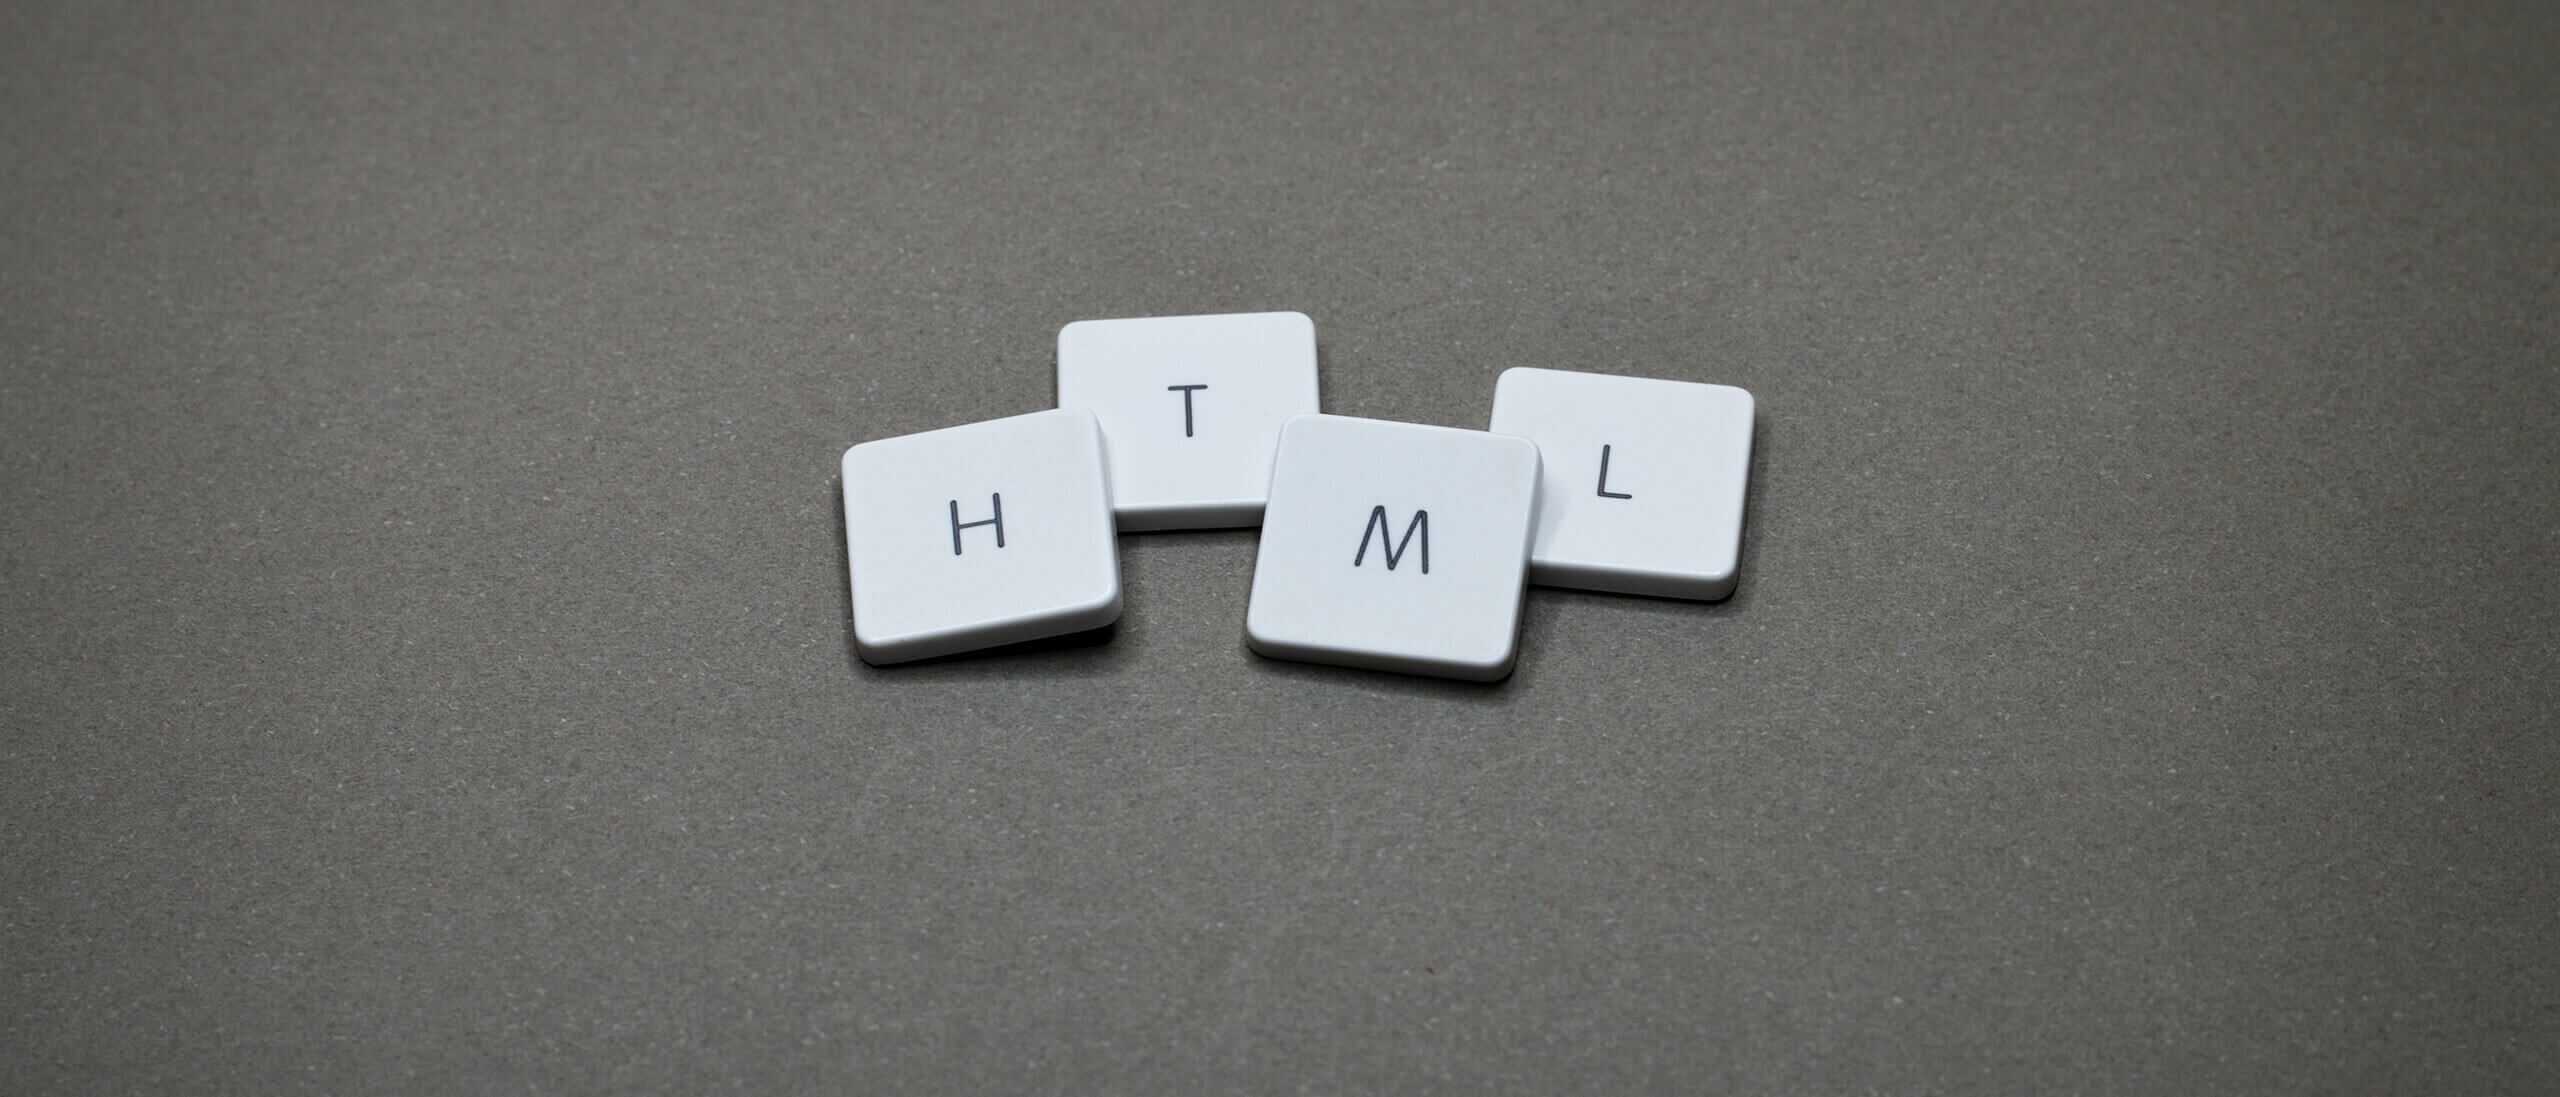 Xây dựng giao diện web với HTML, CSS